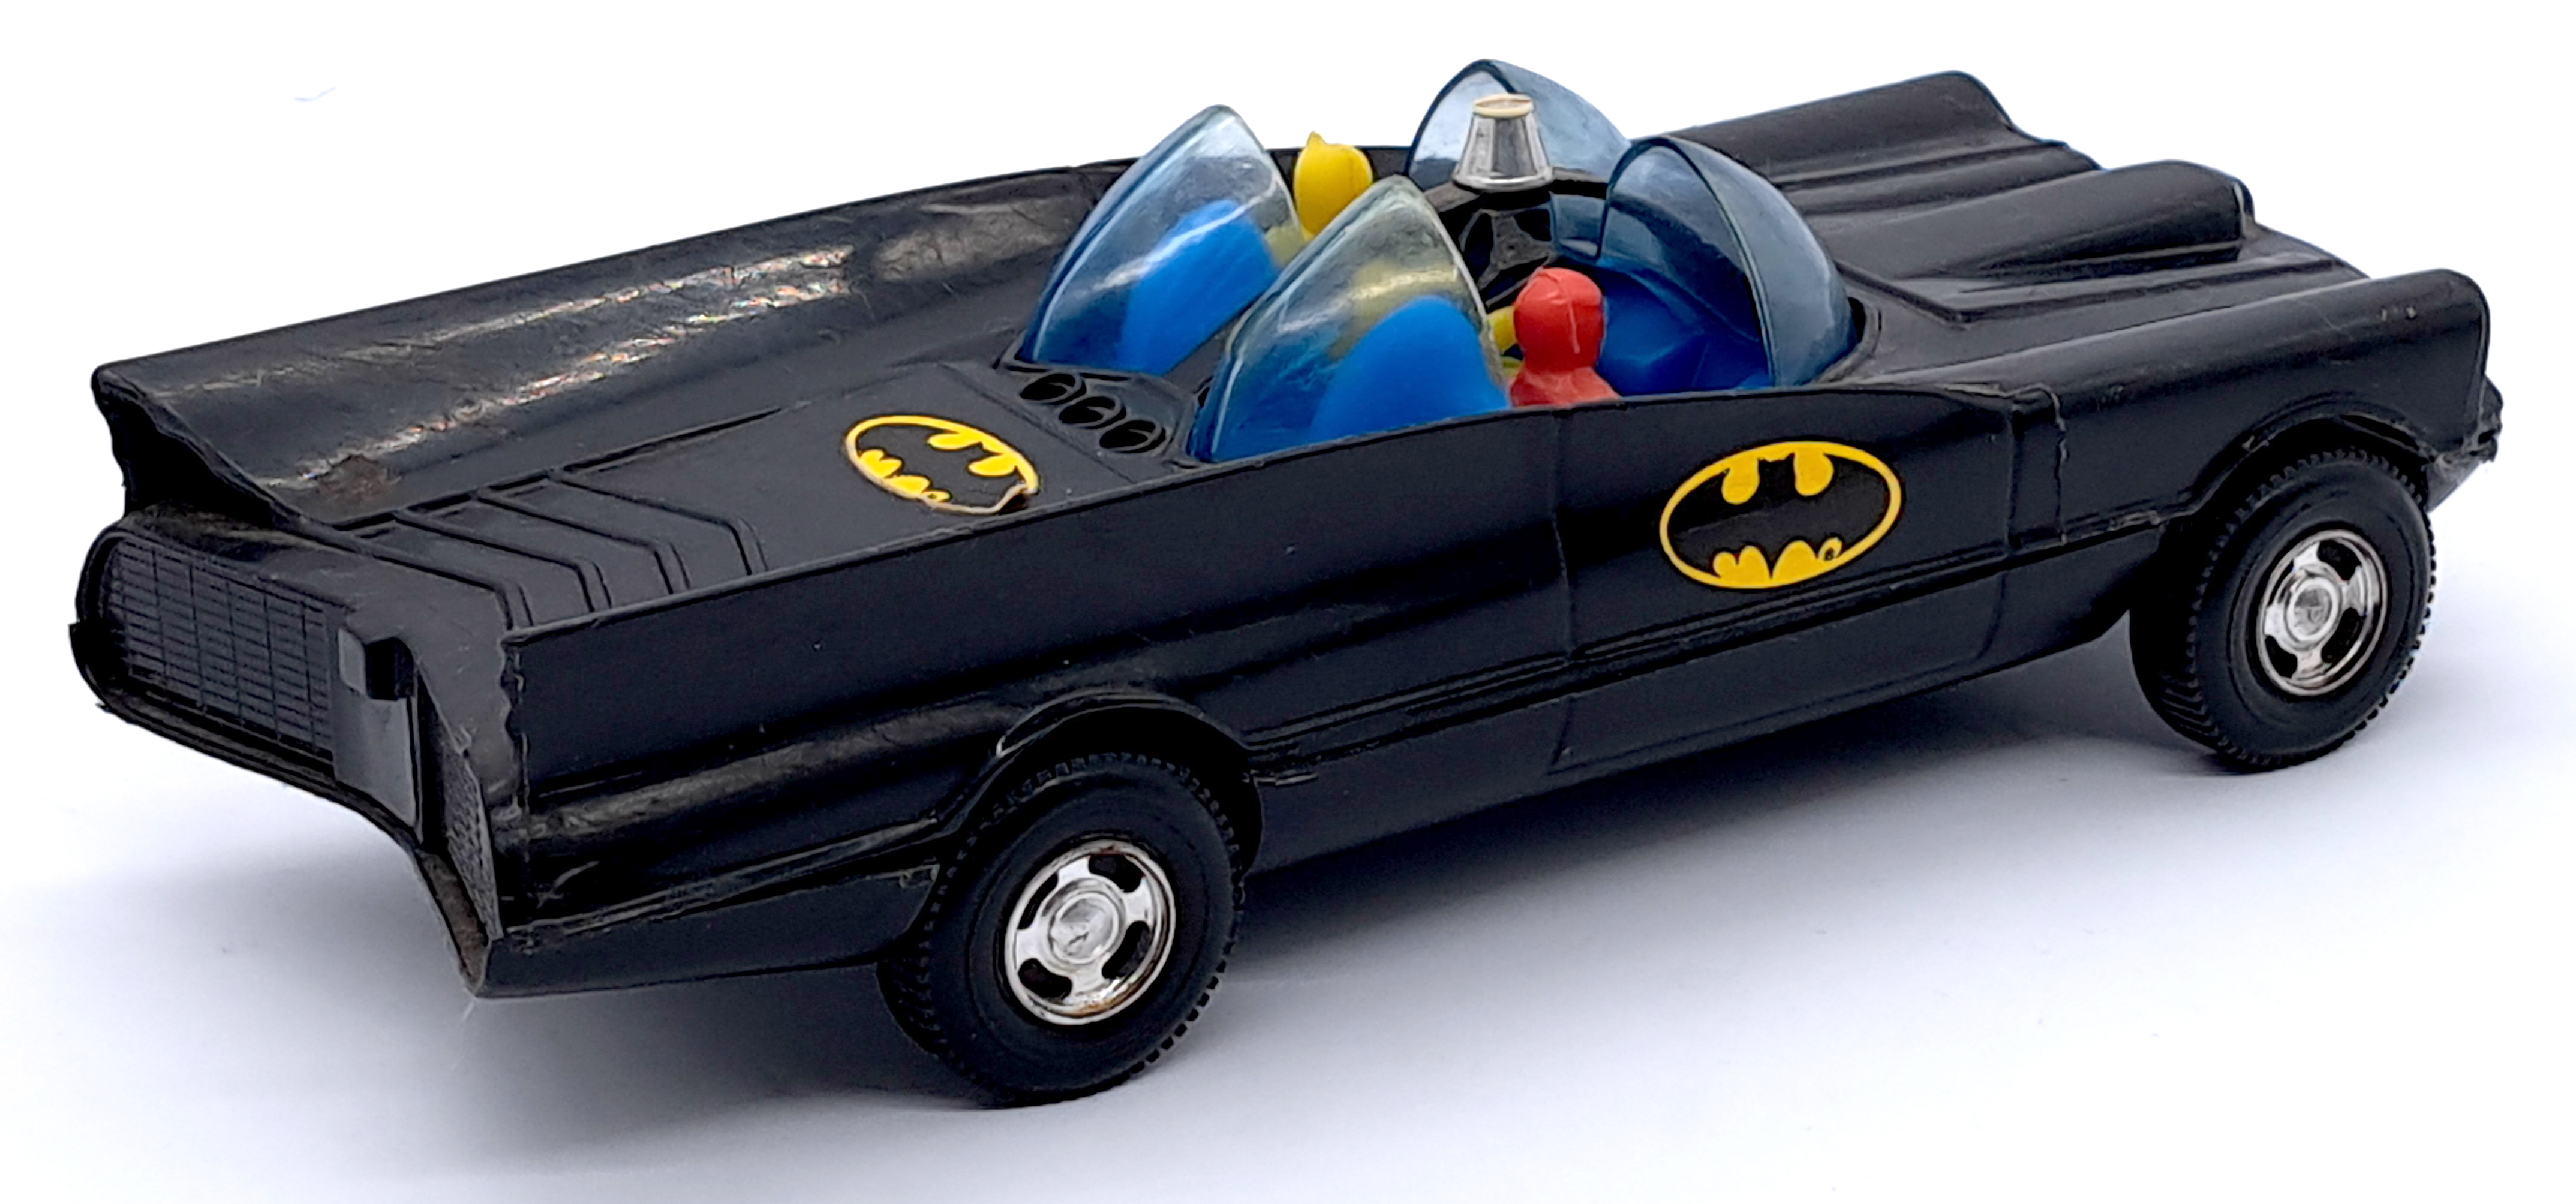 Simms vintage plastic Batmobile - Image 2 of 3